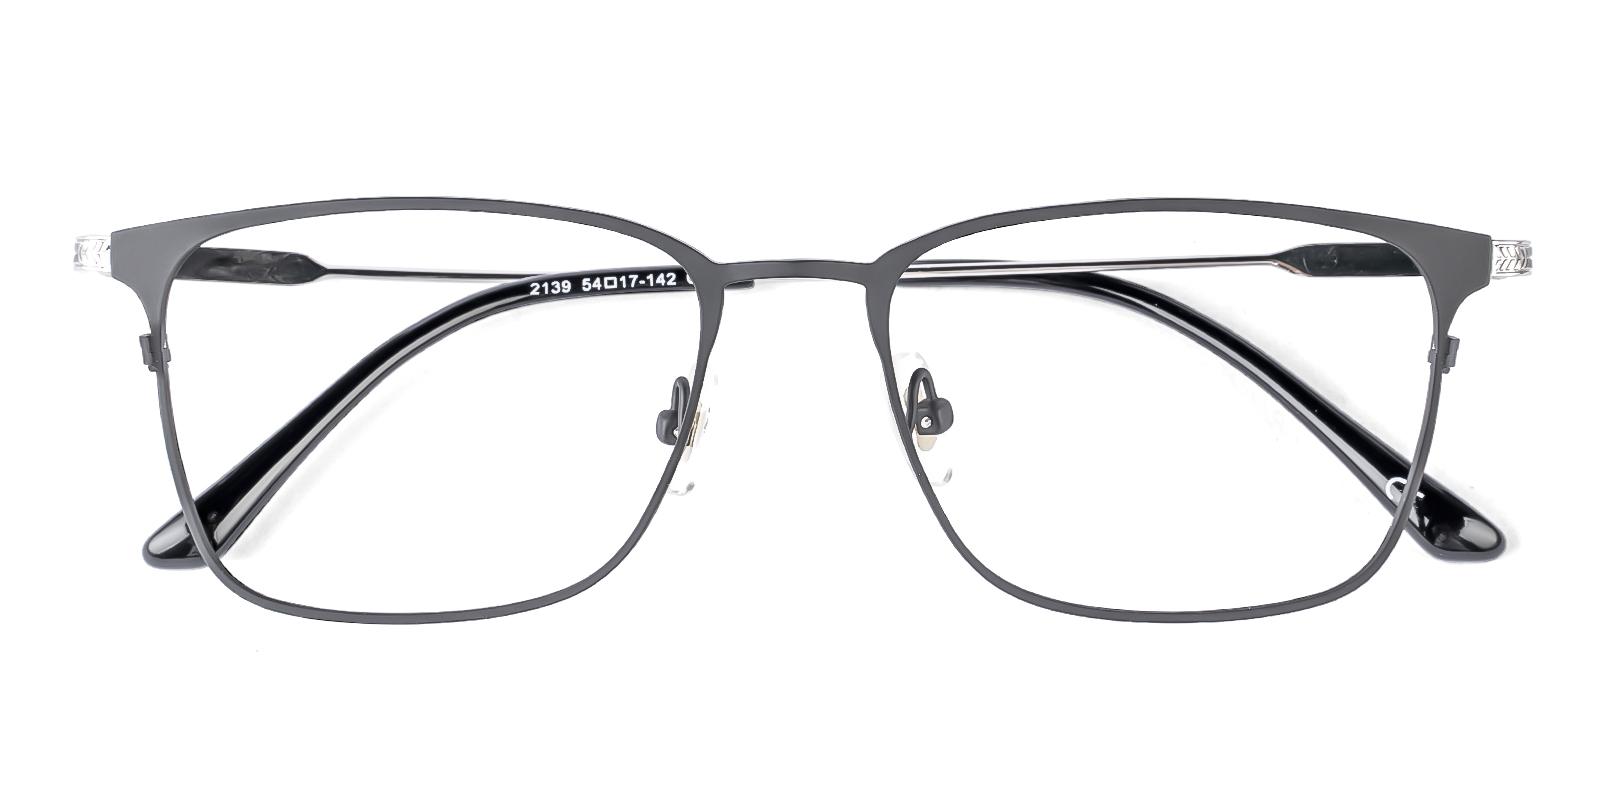 Cerat Silver Metal Eyeglasses , NosePads Frames from ABBE Glasses